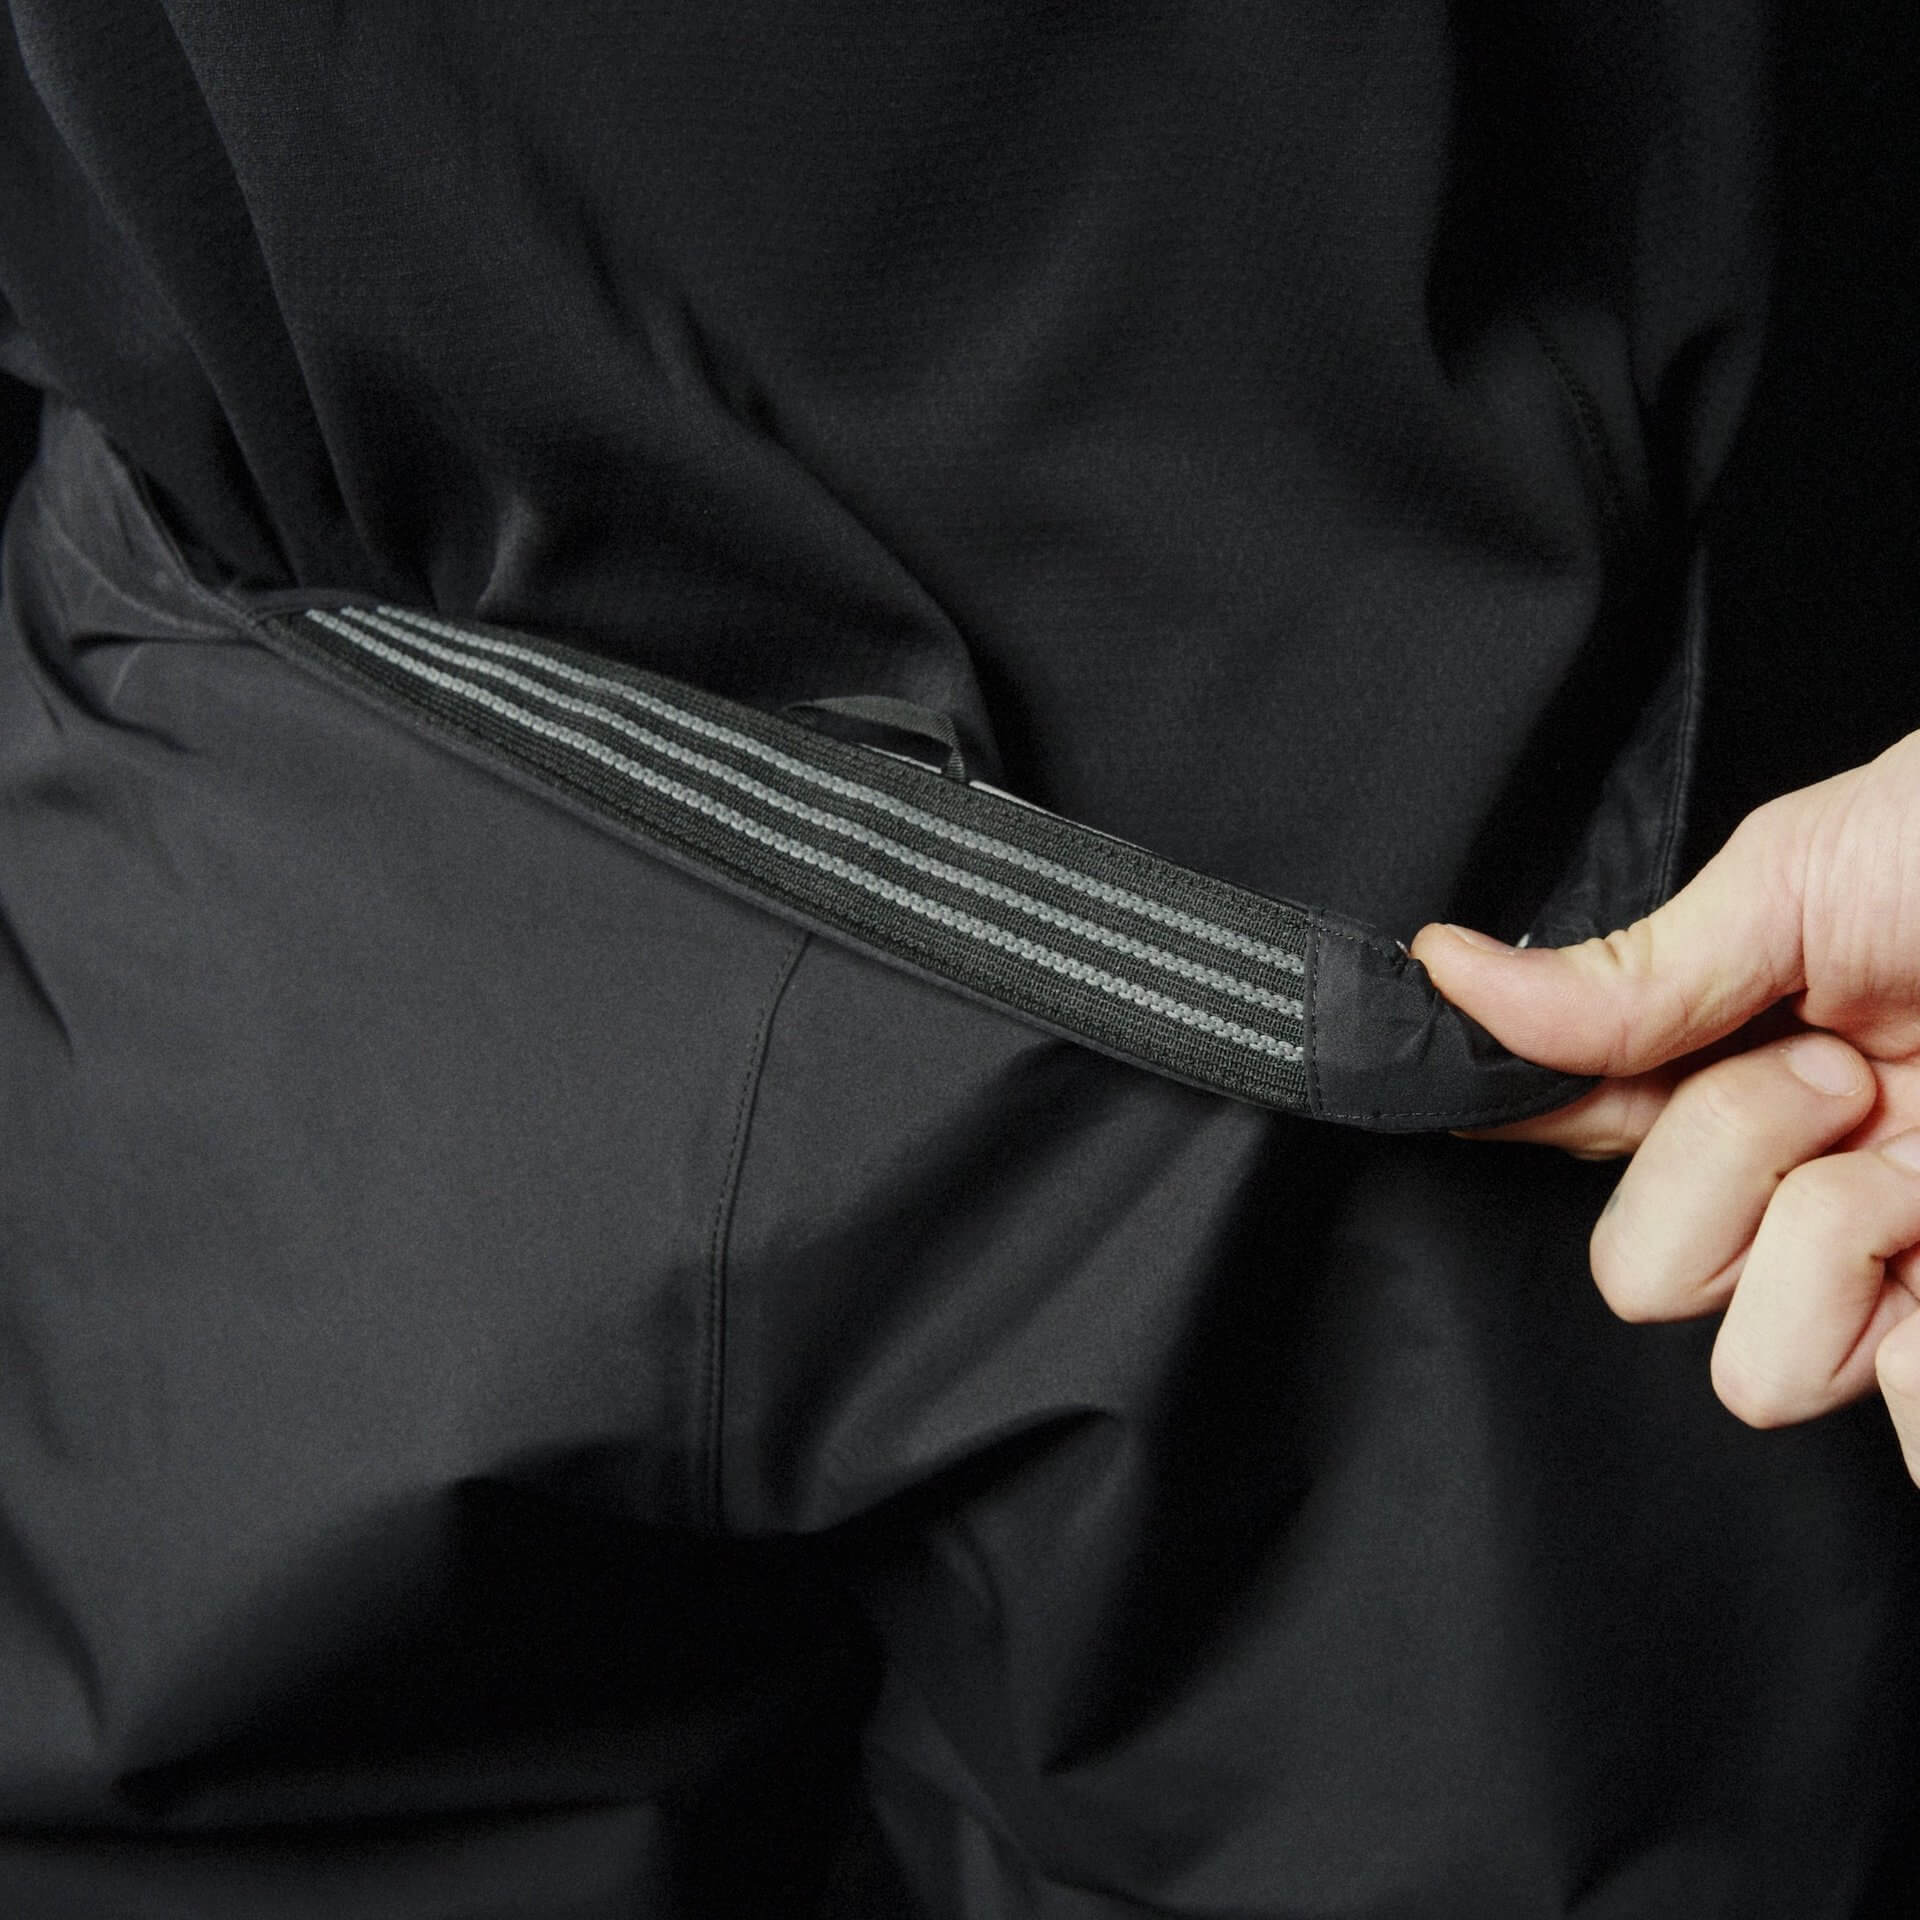 karrimorからGORE-TEX Fabrics採用のレインギアが登場！セットアップ、レインジャケット、パンツがラインナップ fashion220121_karrimor-013